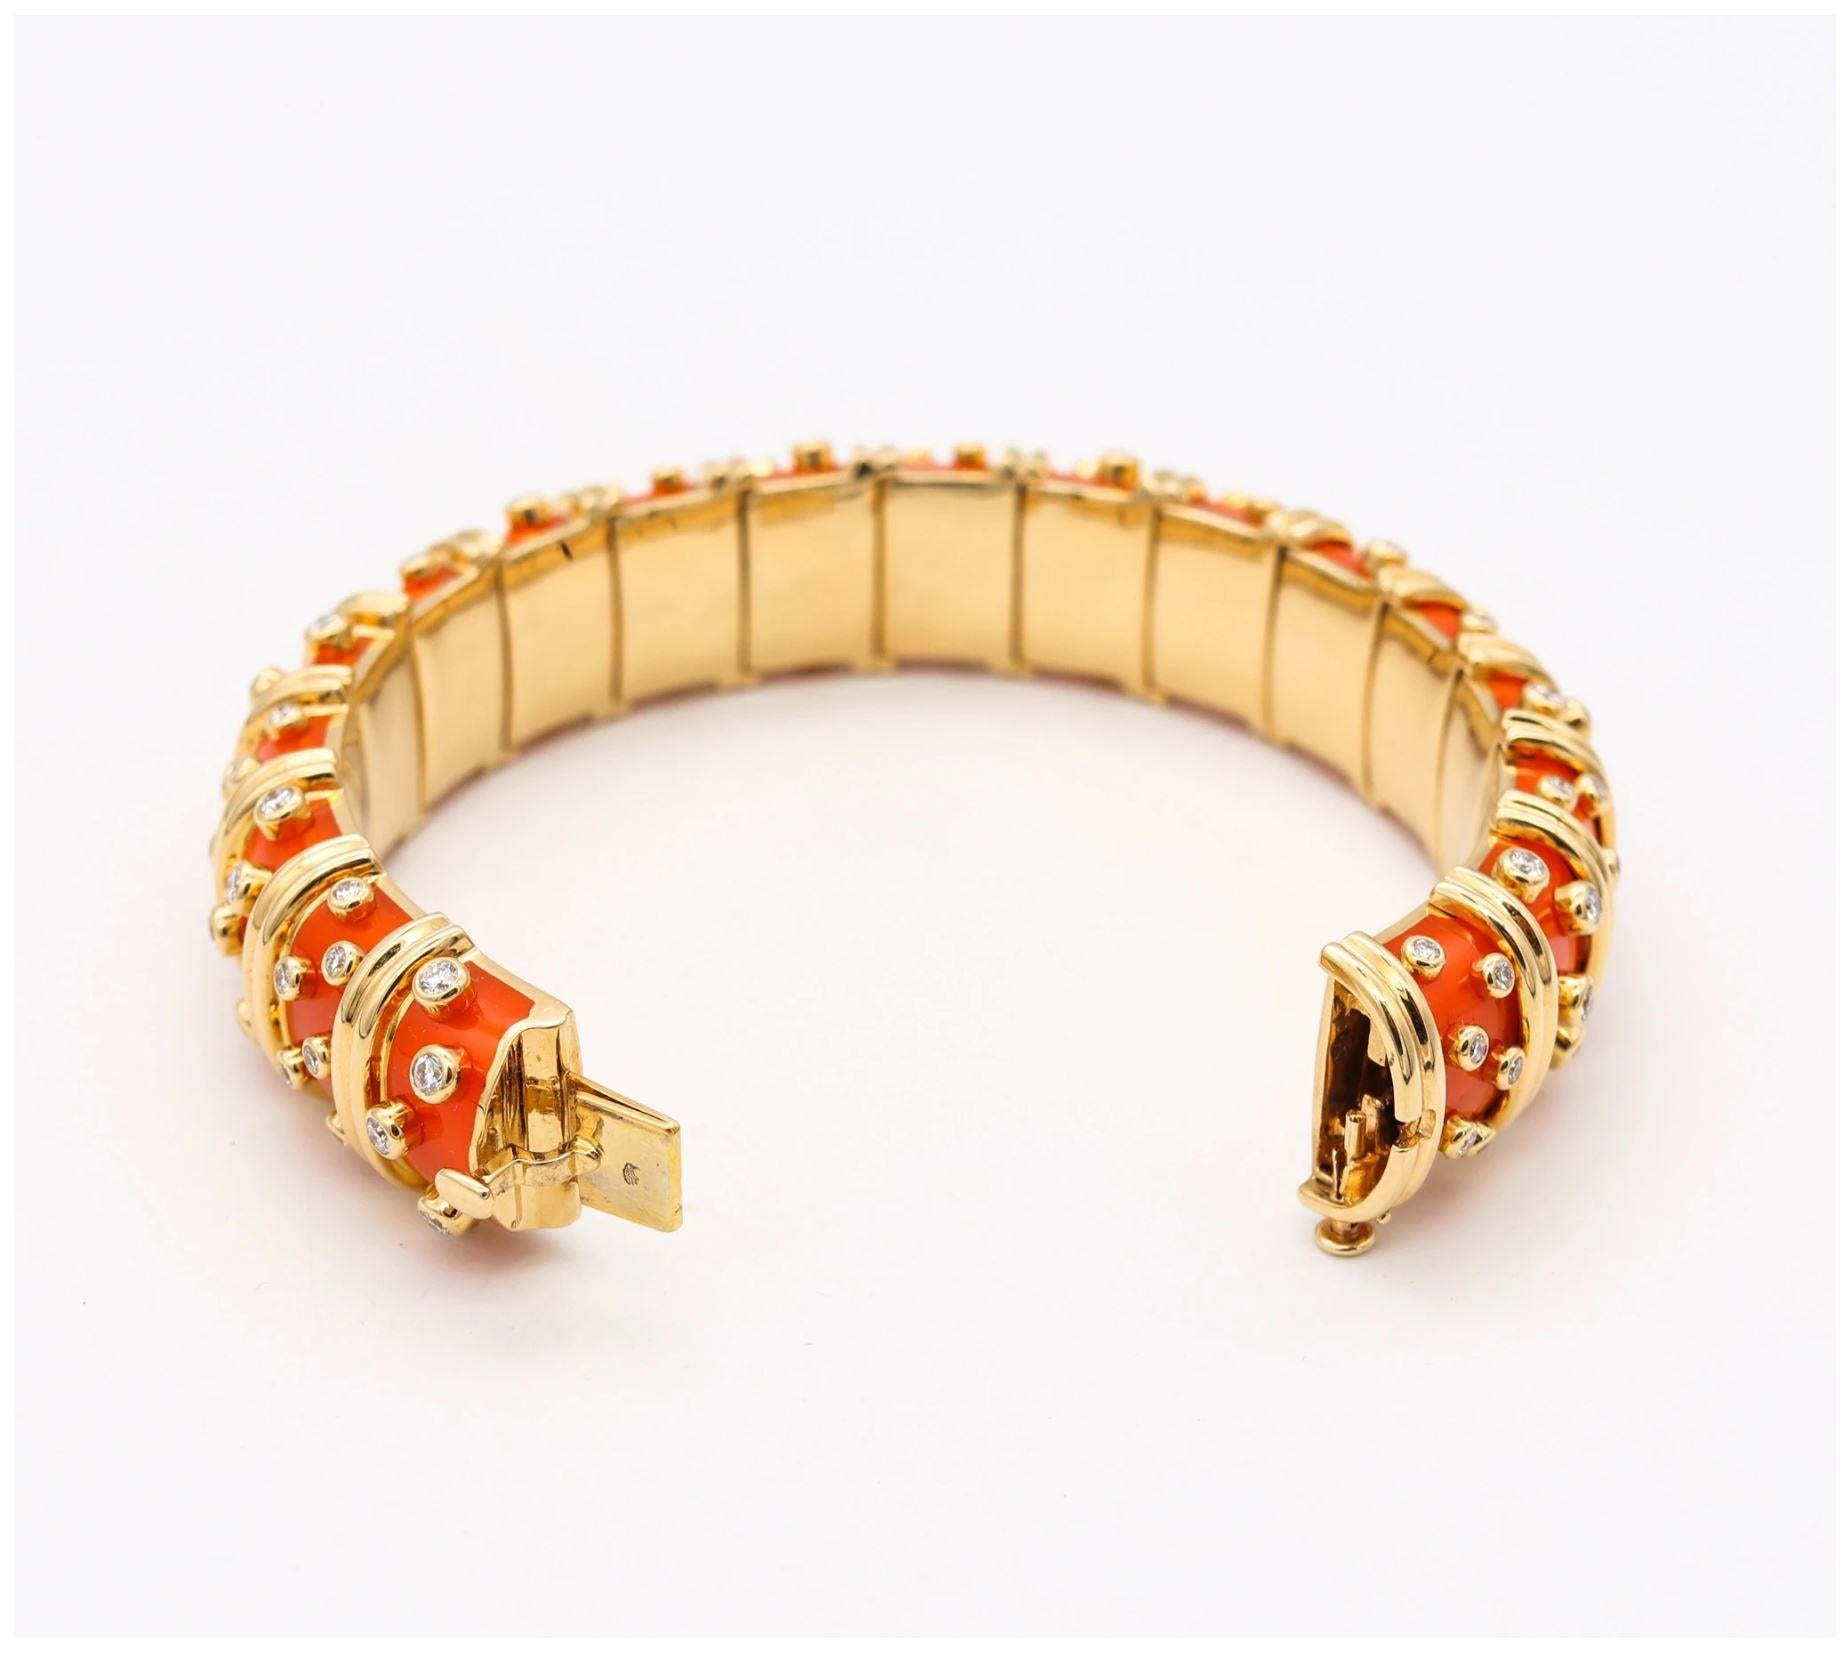 Brilliant Cut Tiffany & Co. Schlumberger Orange Enamel Bangle Bracelet 18Kt Gold & Diamonds